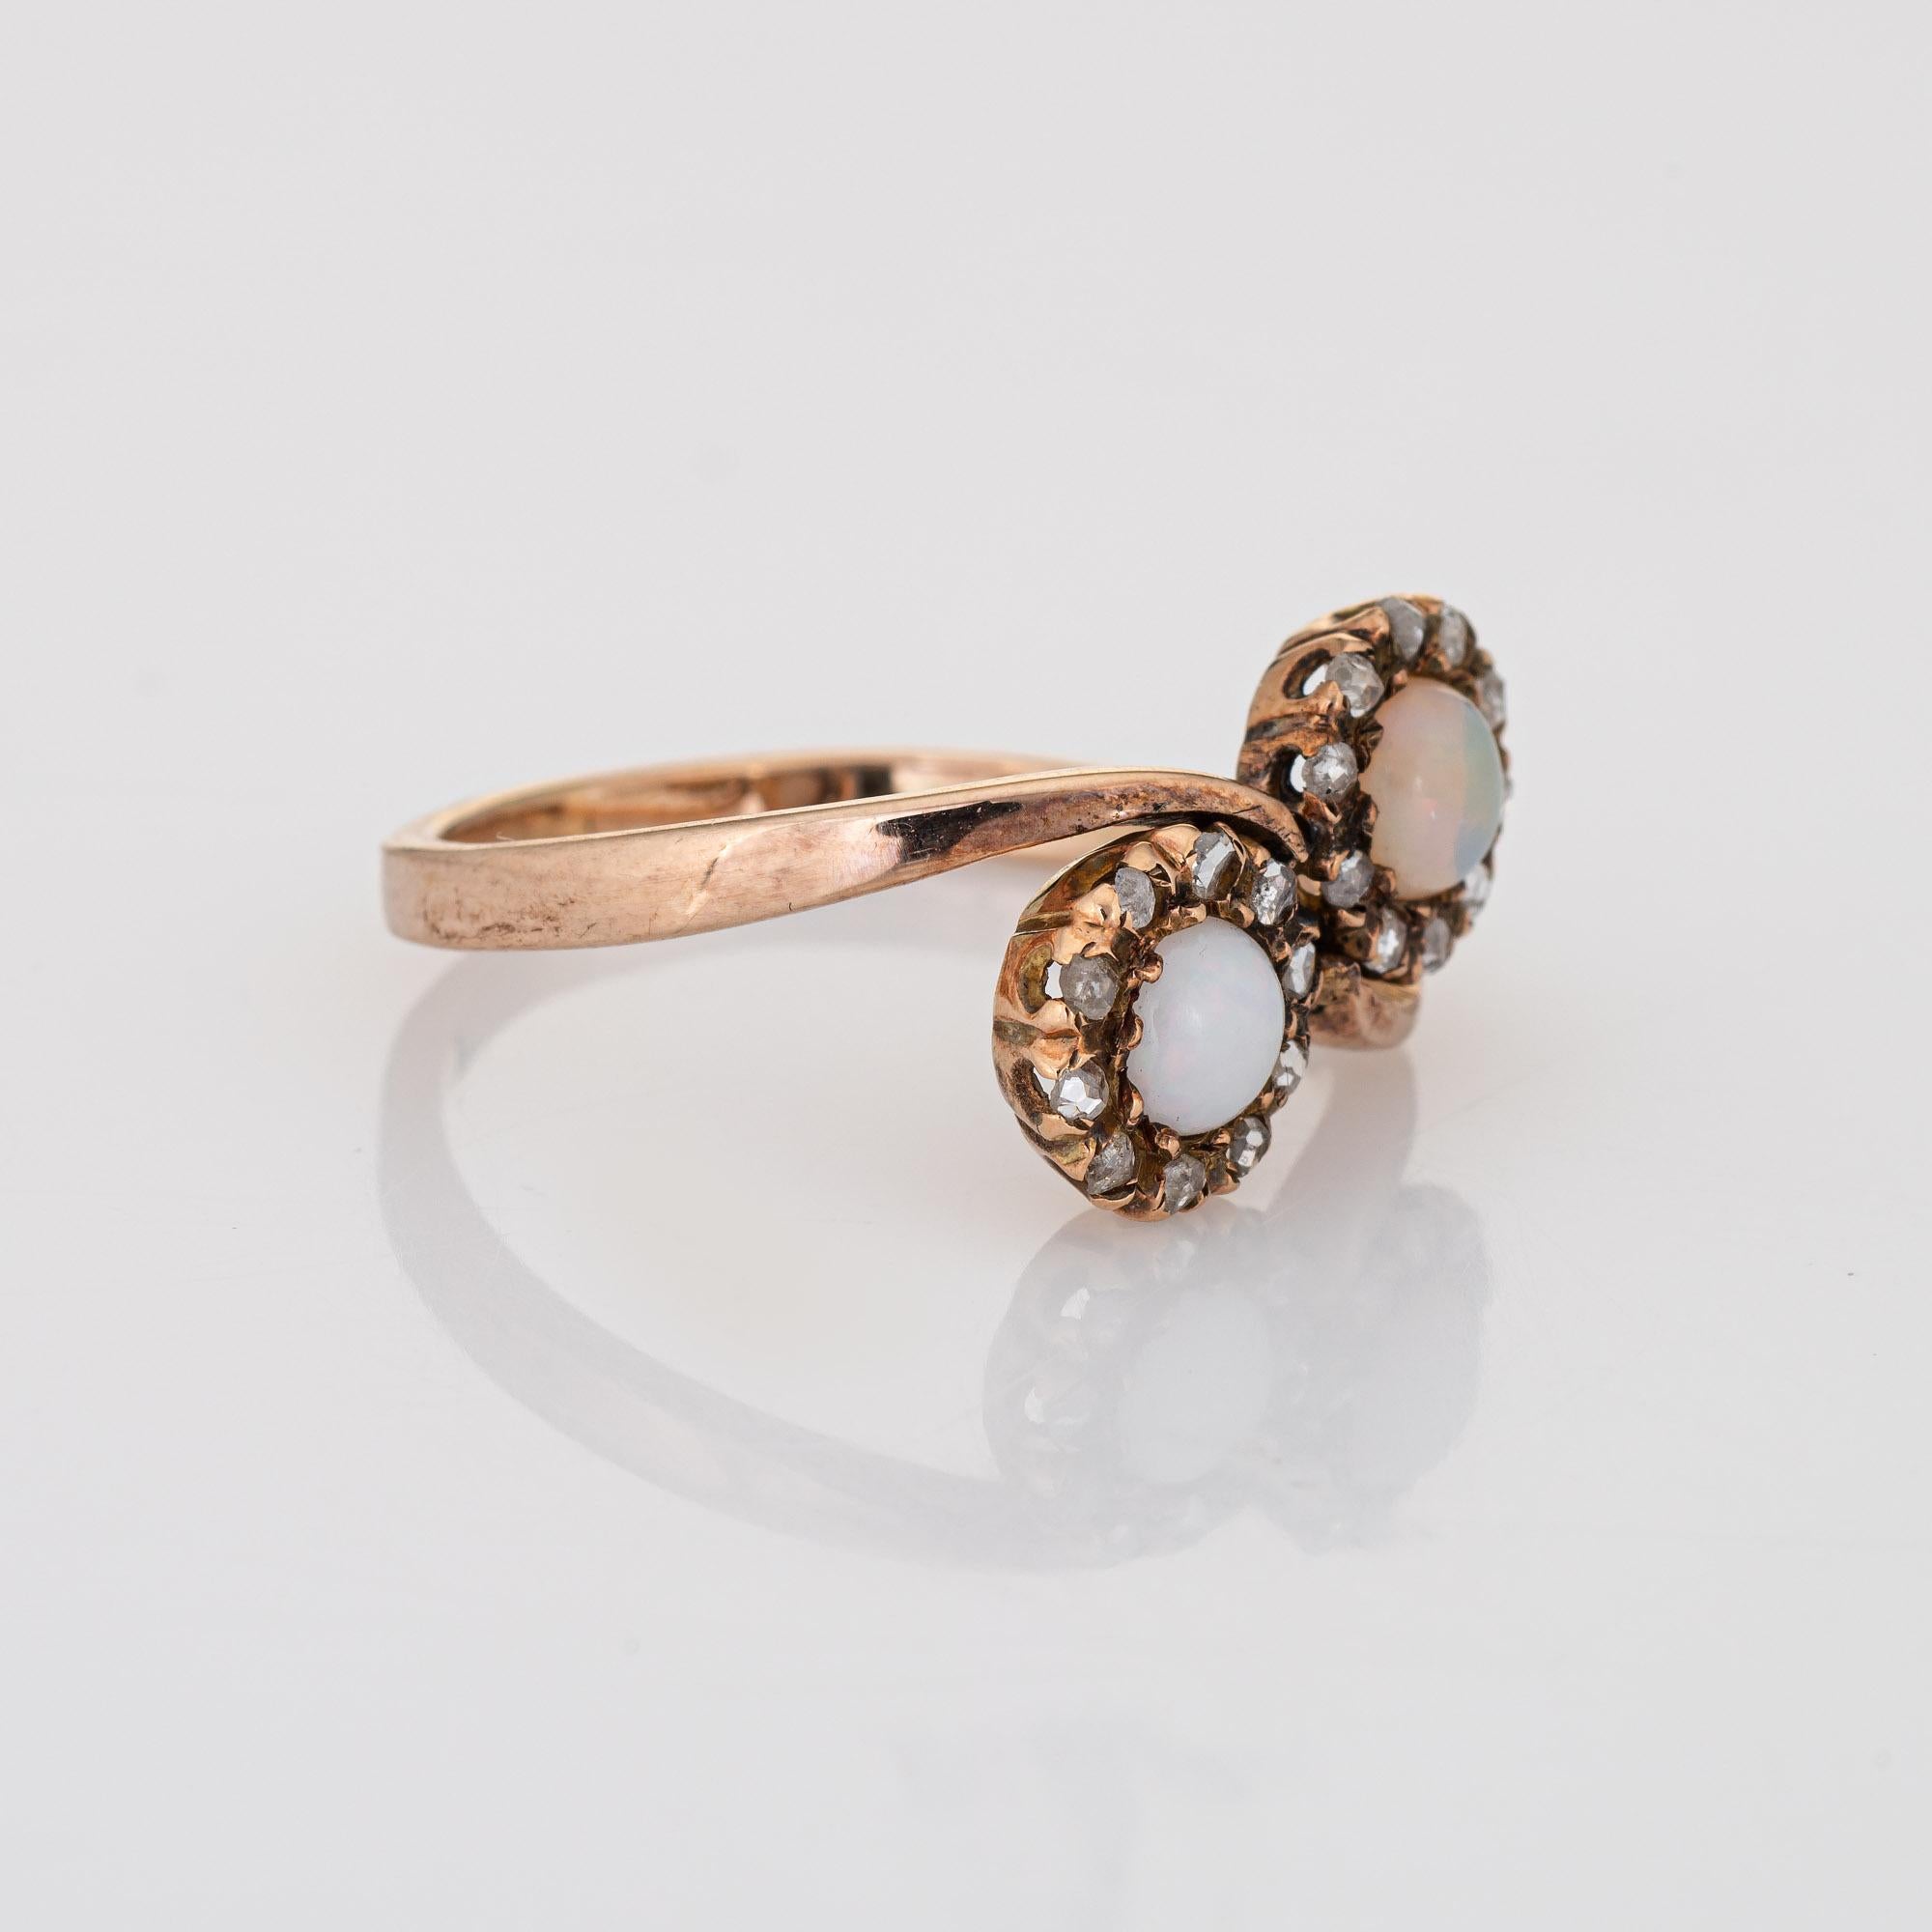 Cabochon Antique Victorian Diamond Opal Ring Moi et Toi 10k Gold Vintage Jewelry